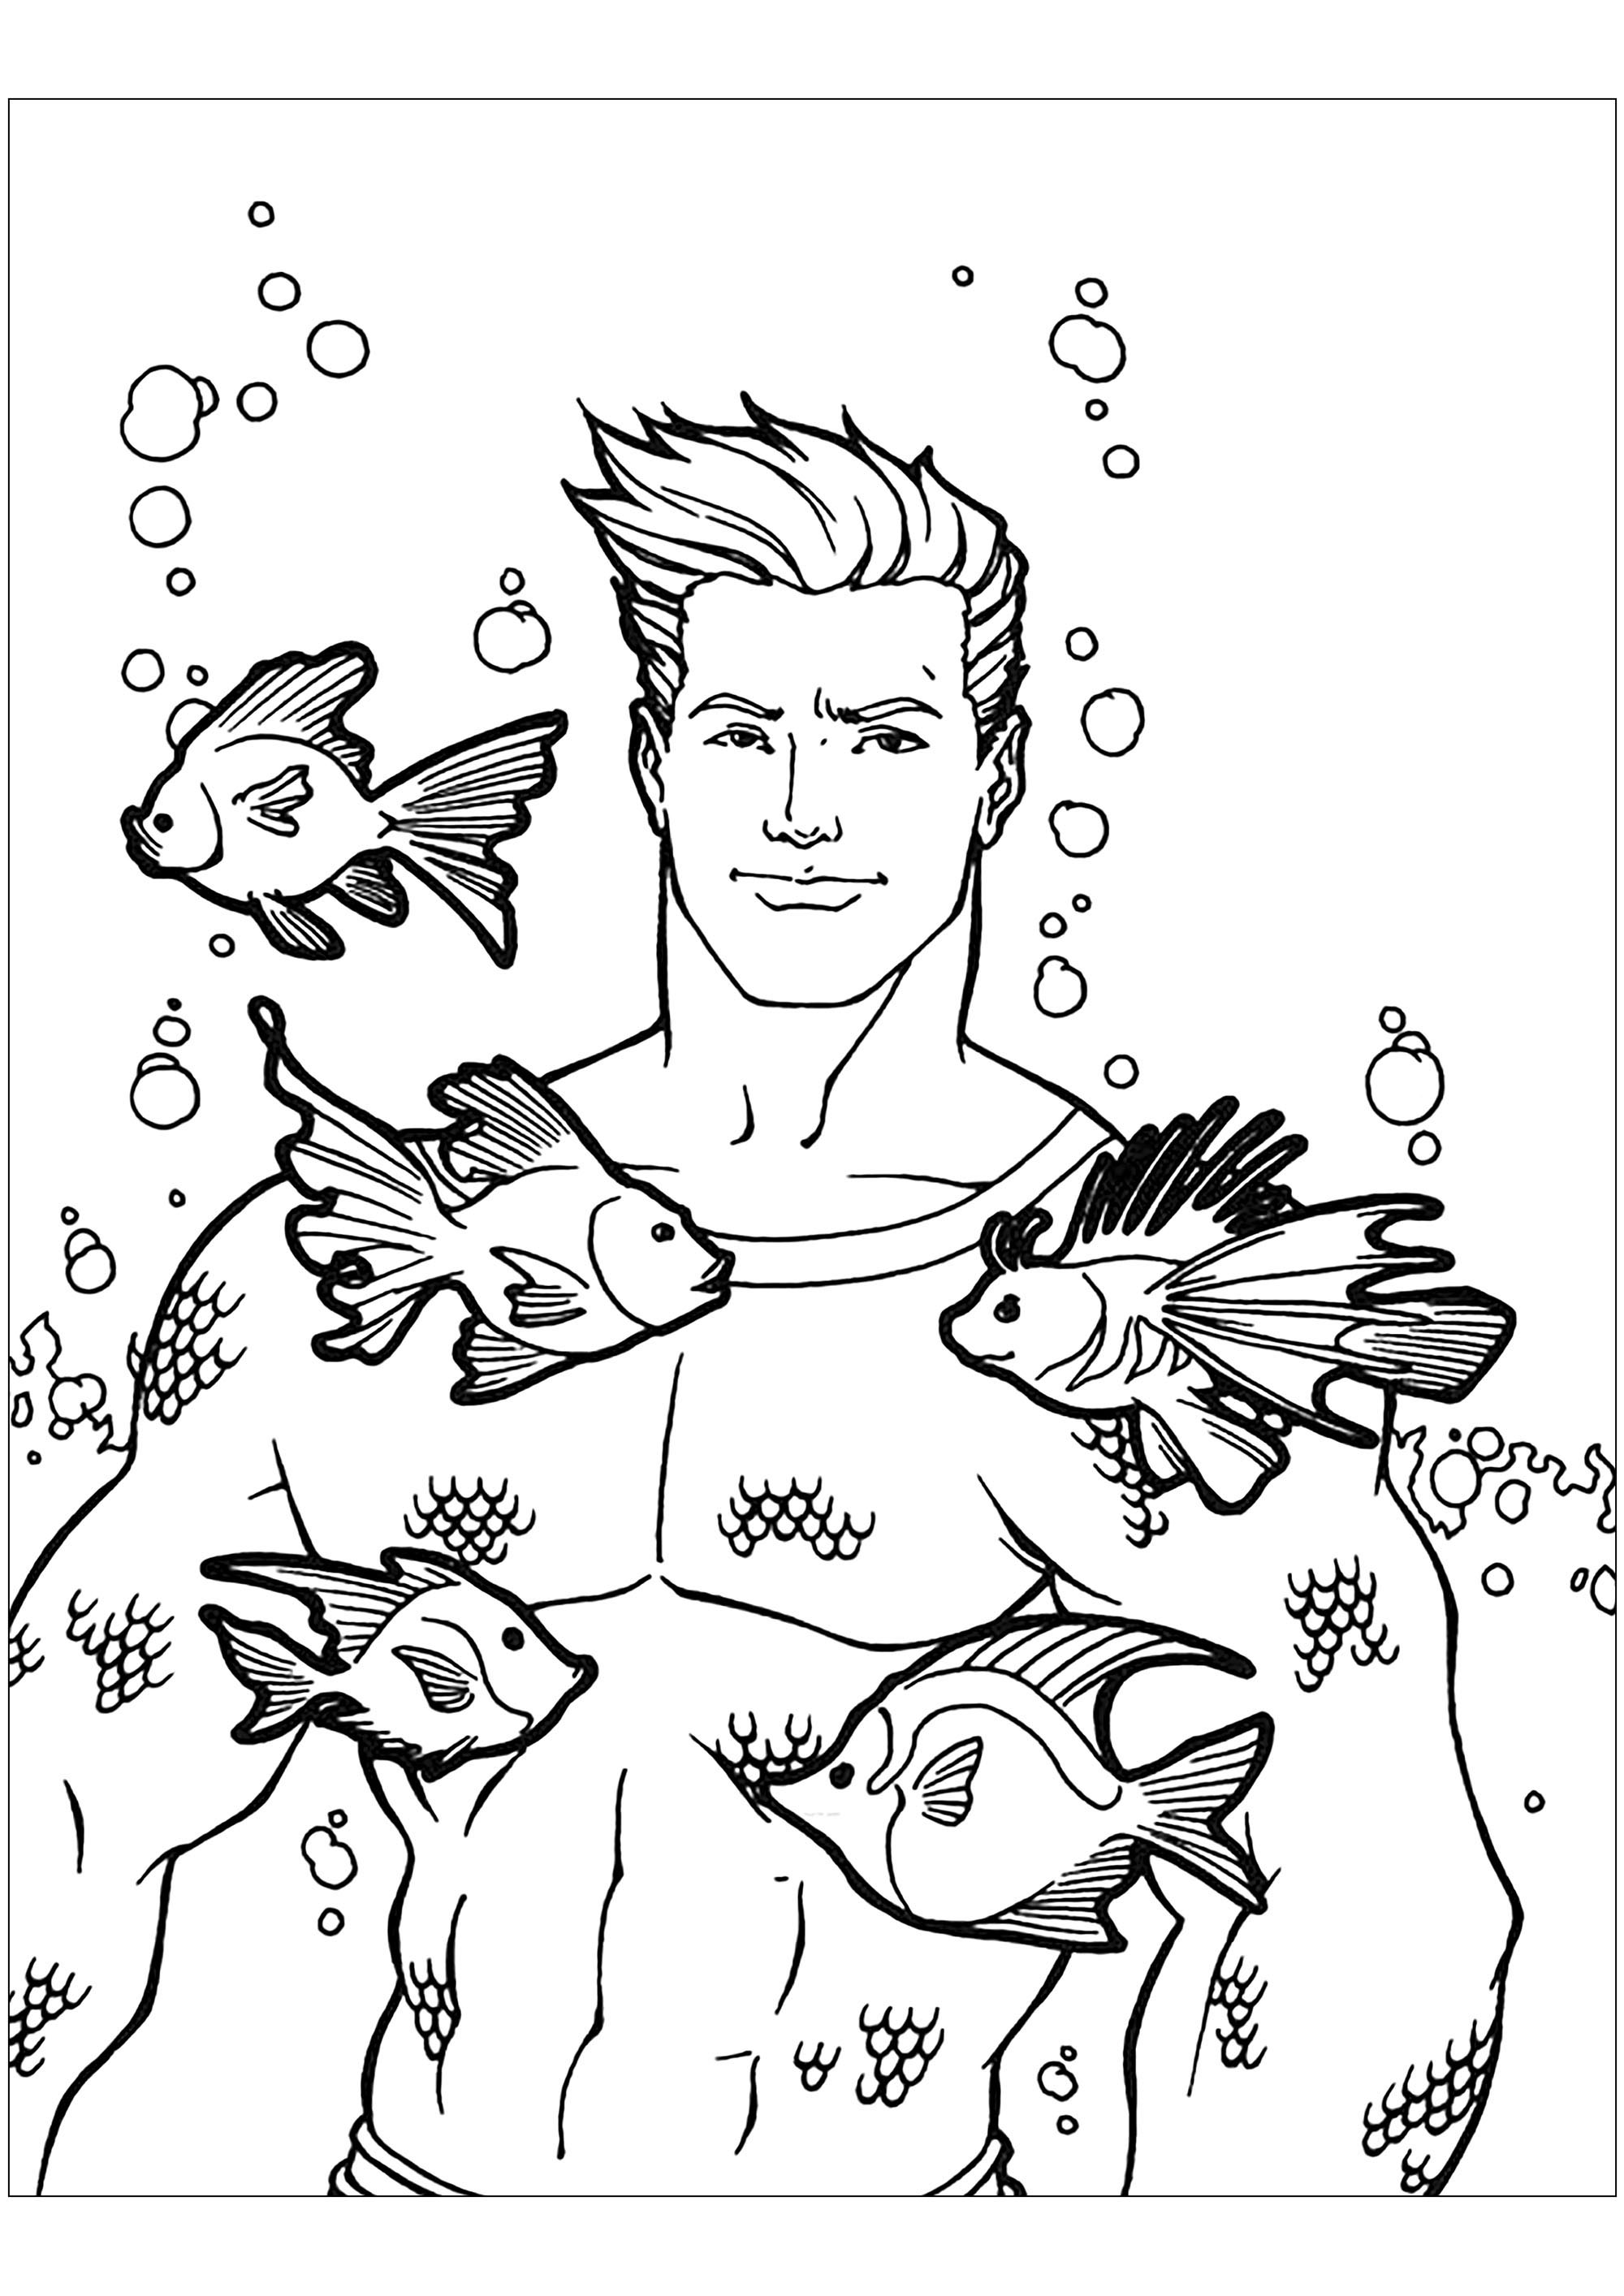 Aquaman With Fish Coloring Page